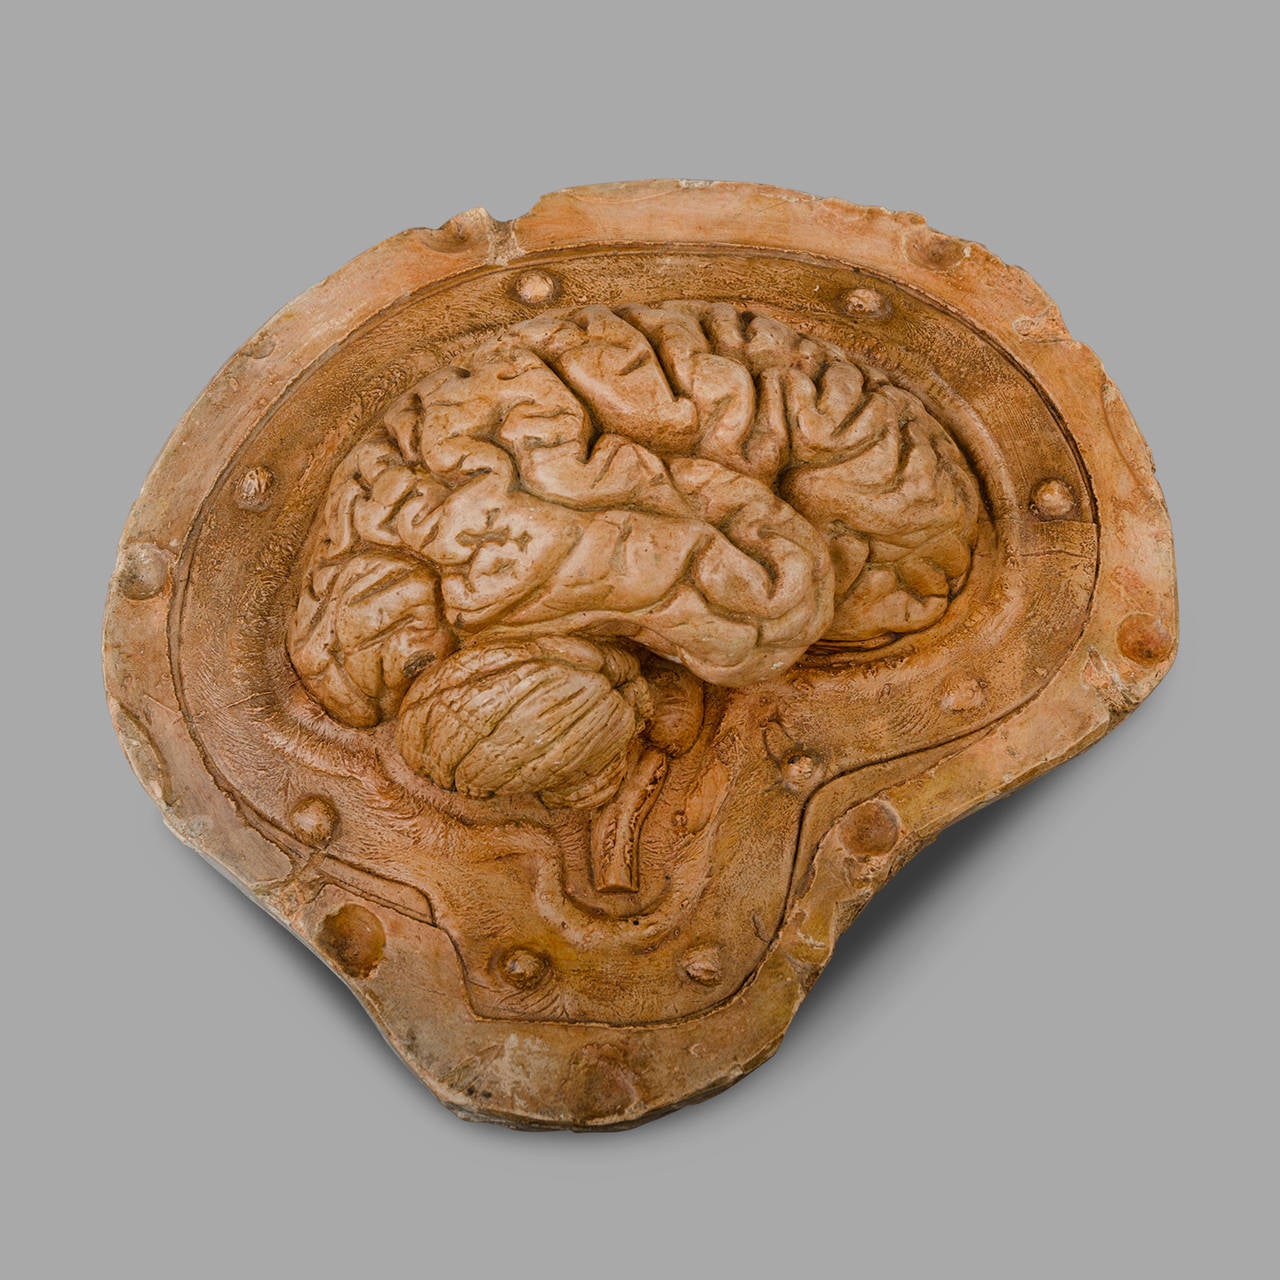 French Human Half Brain Anatomical 